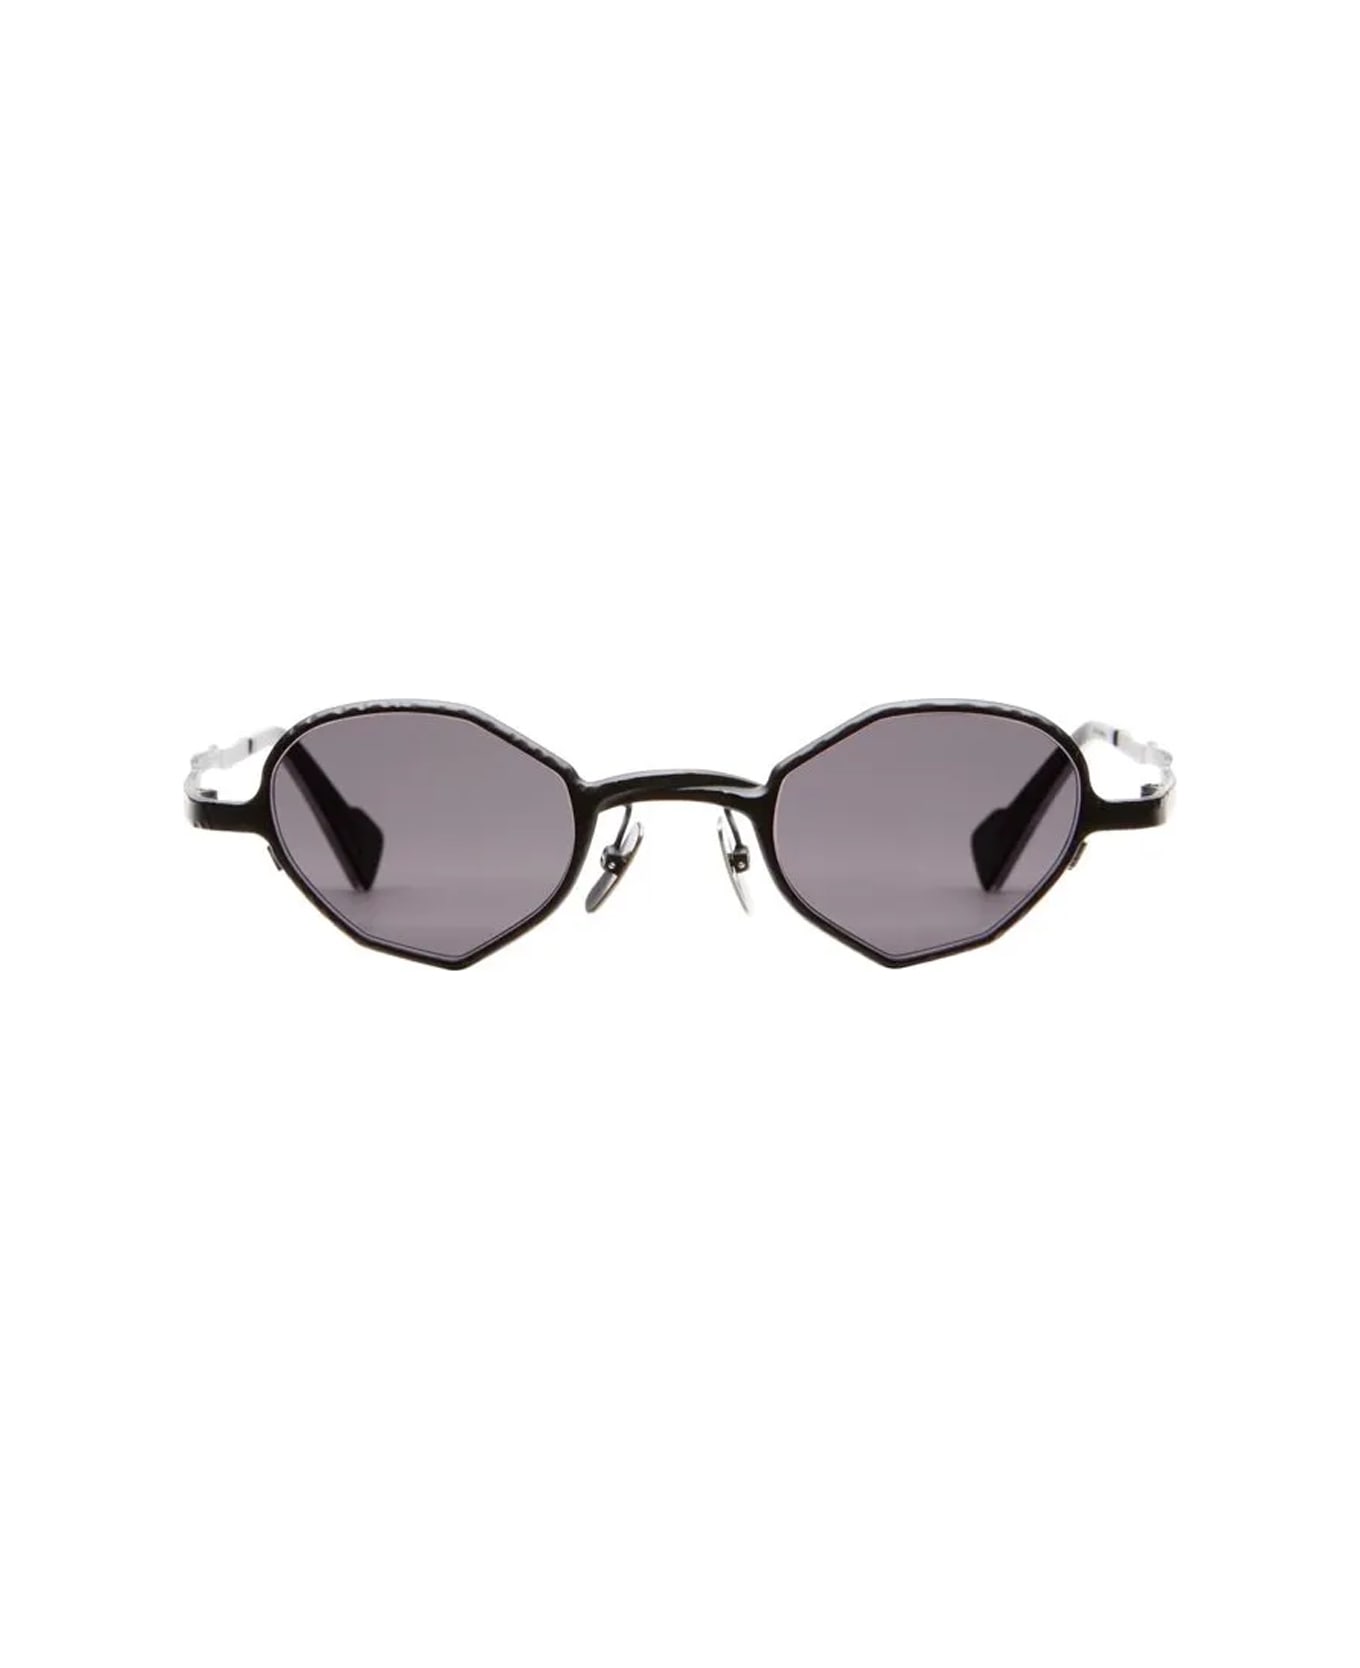 Kuboraum Maske Z20 Bm 2y Sunglasses - Nero サングラス